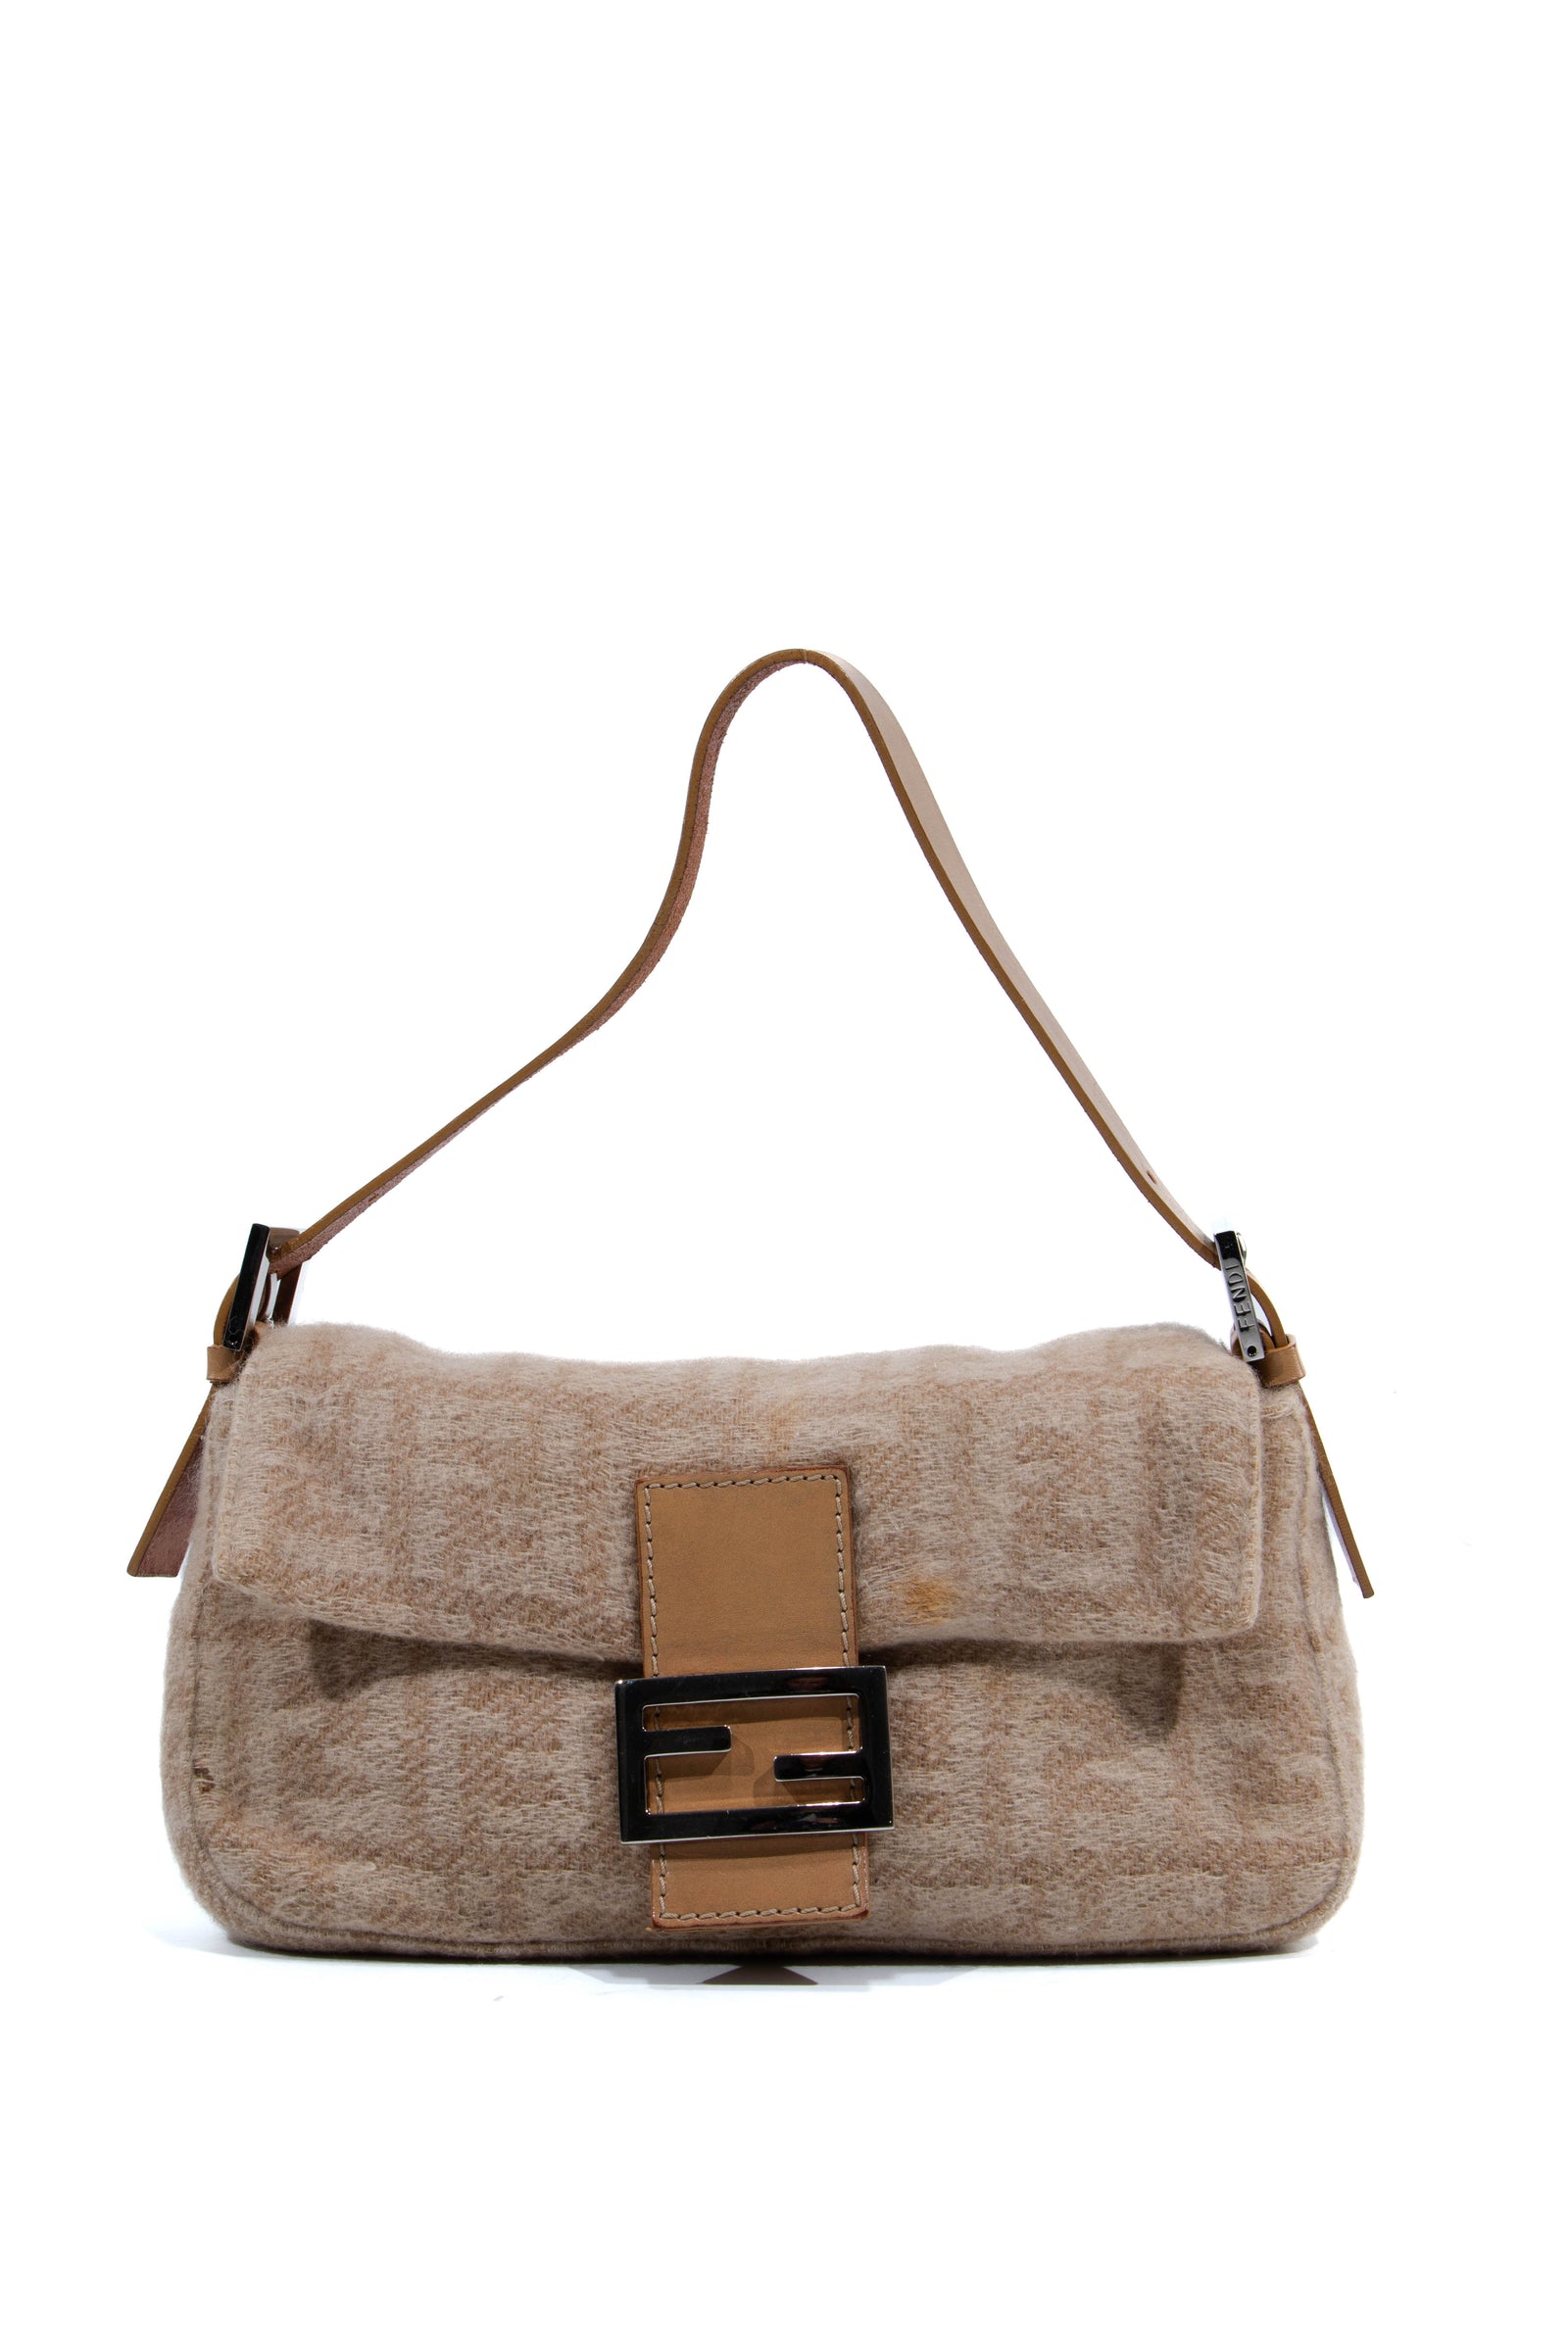 Fendi - Authenticated Croissant Vintage Handbag - Cotton Brown for Women, Very Good Condition